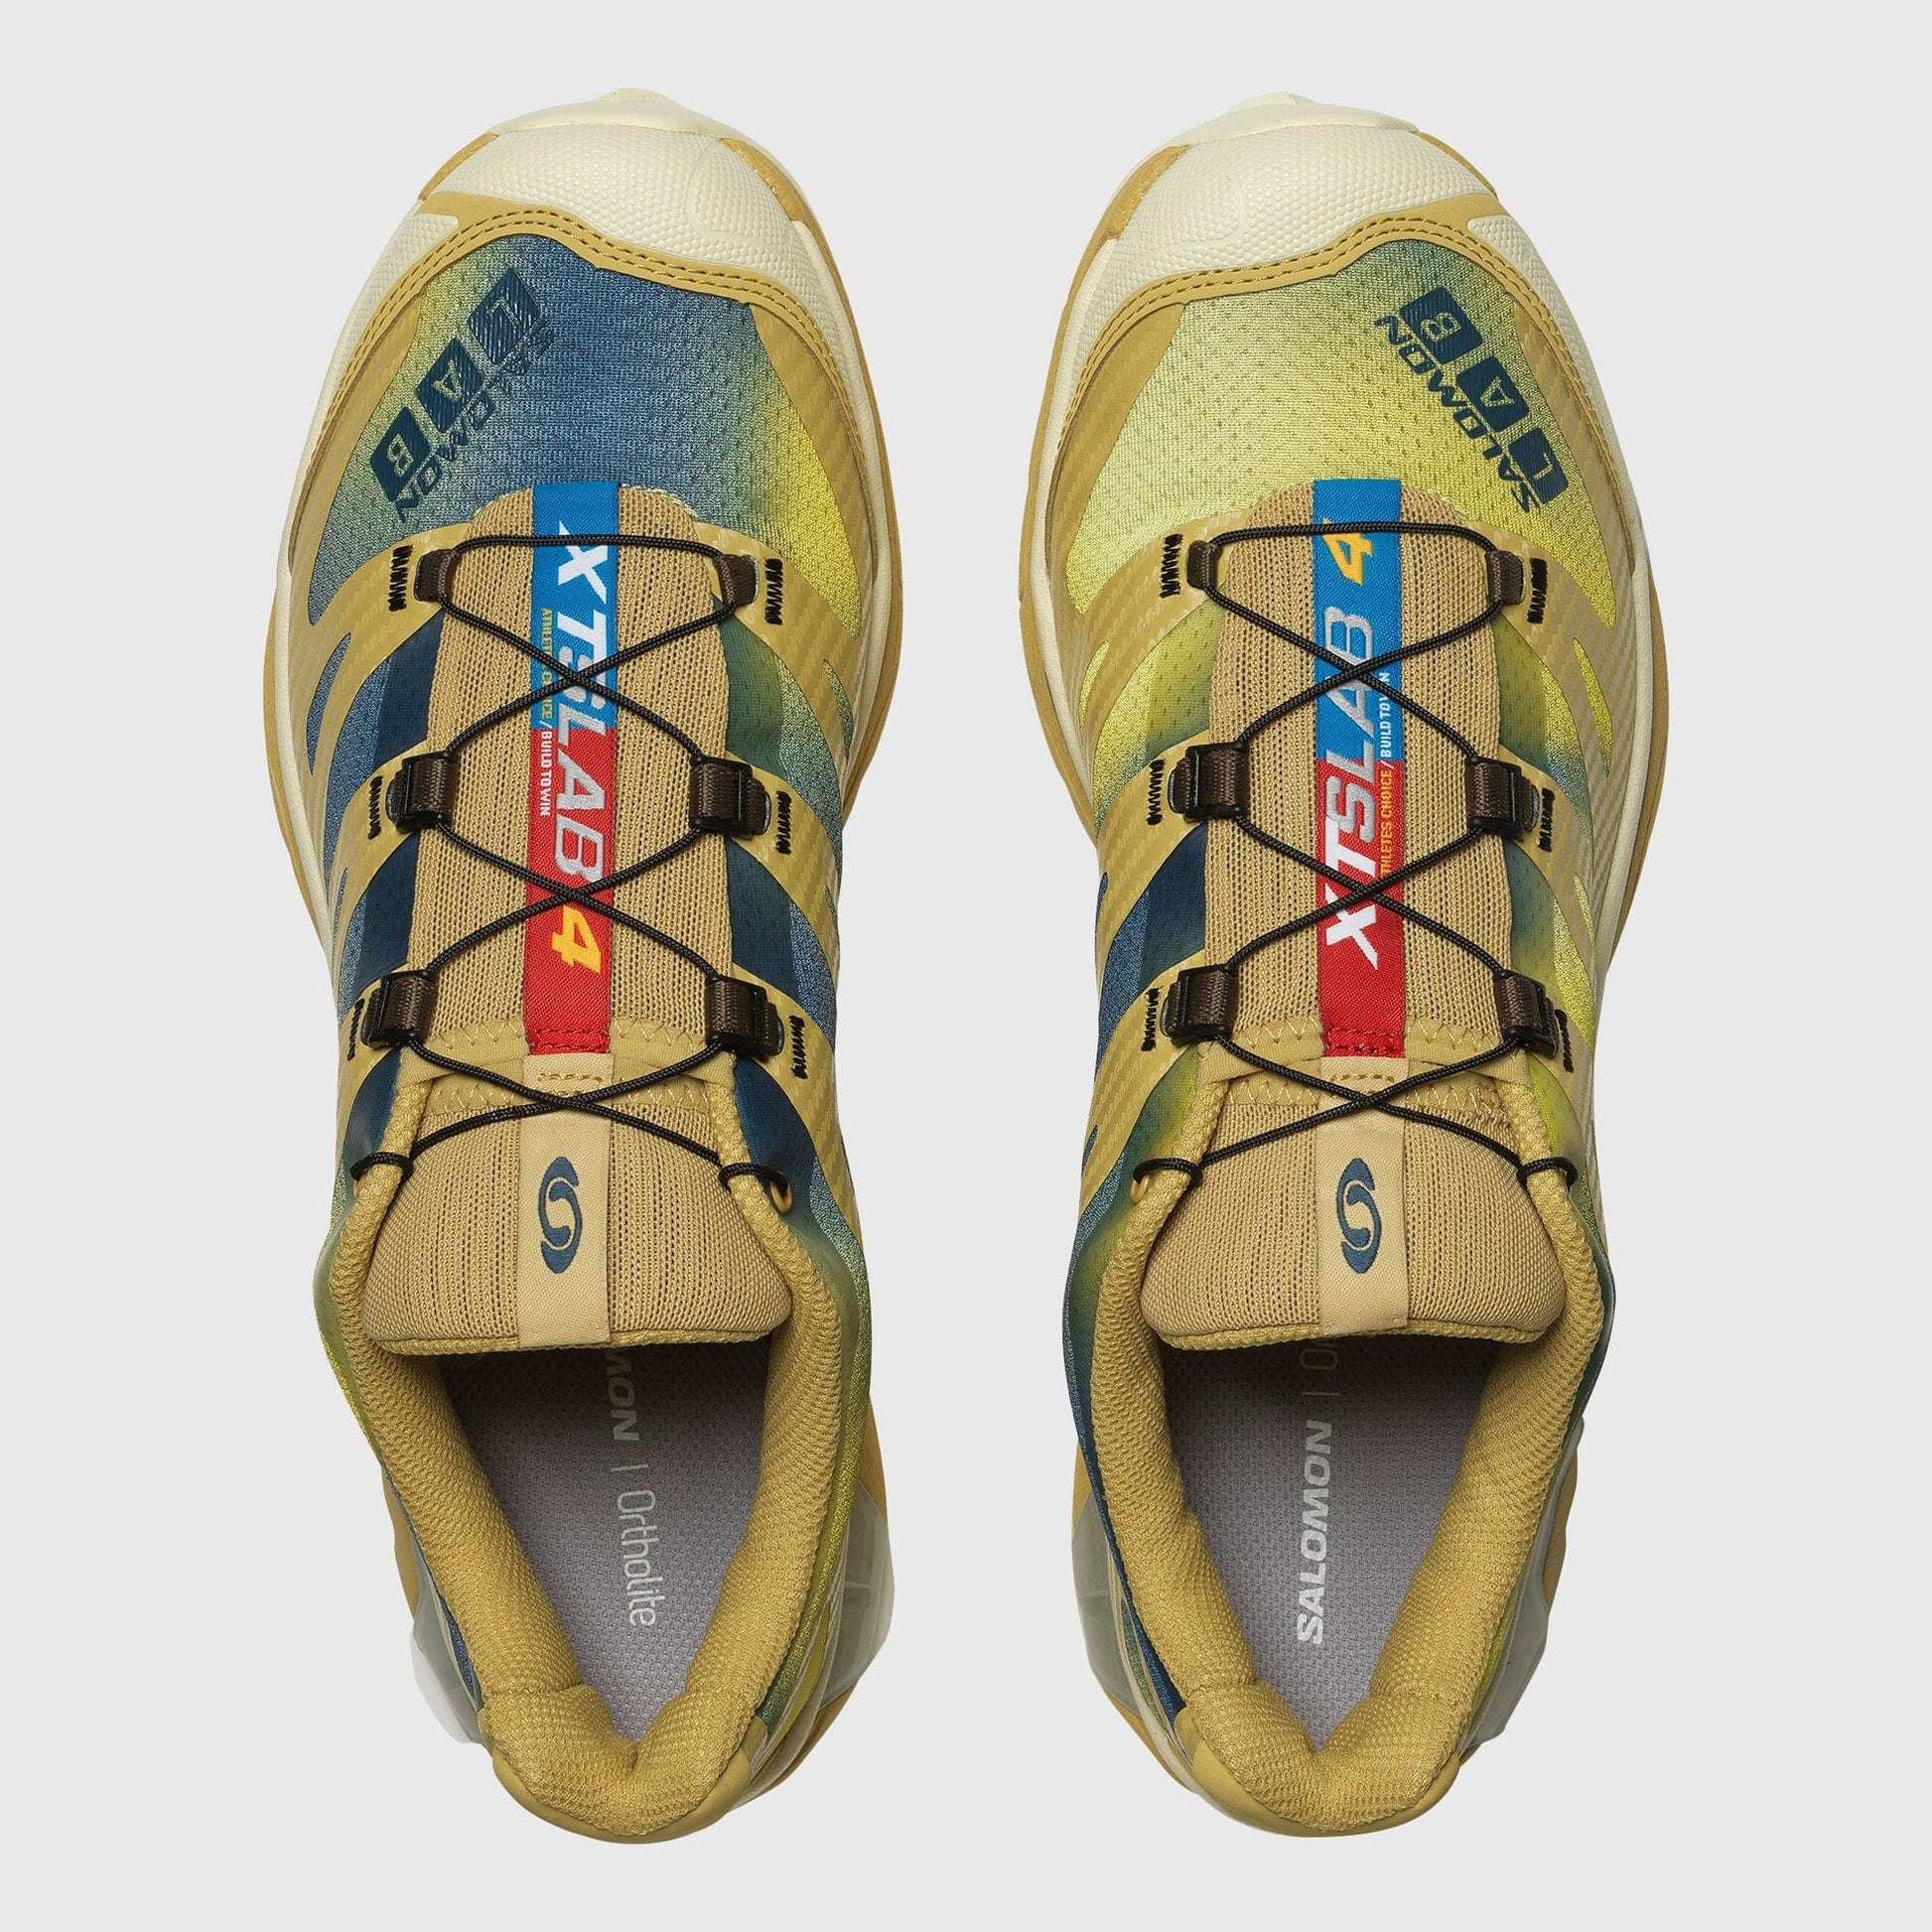 Salomon XT-4 OG AURORA BOREALIS Sneakers - Southern Moss / Transparent Yellow / Deep Dive Sneakers Salomon 